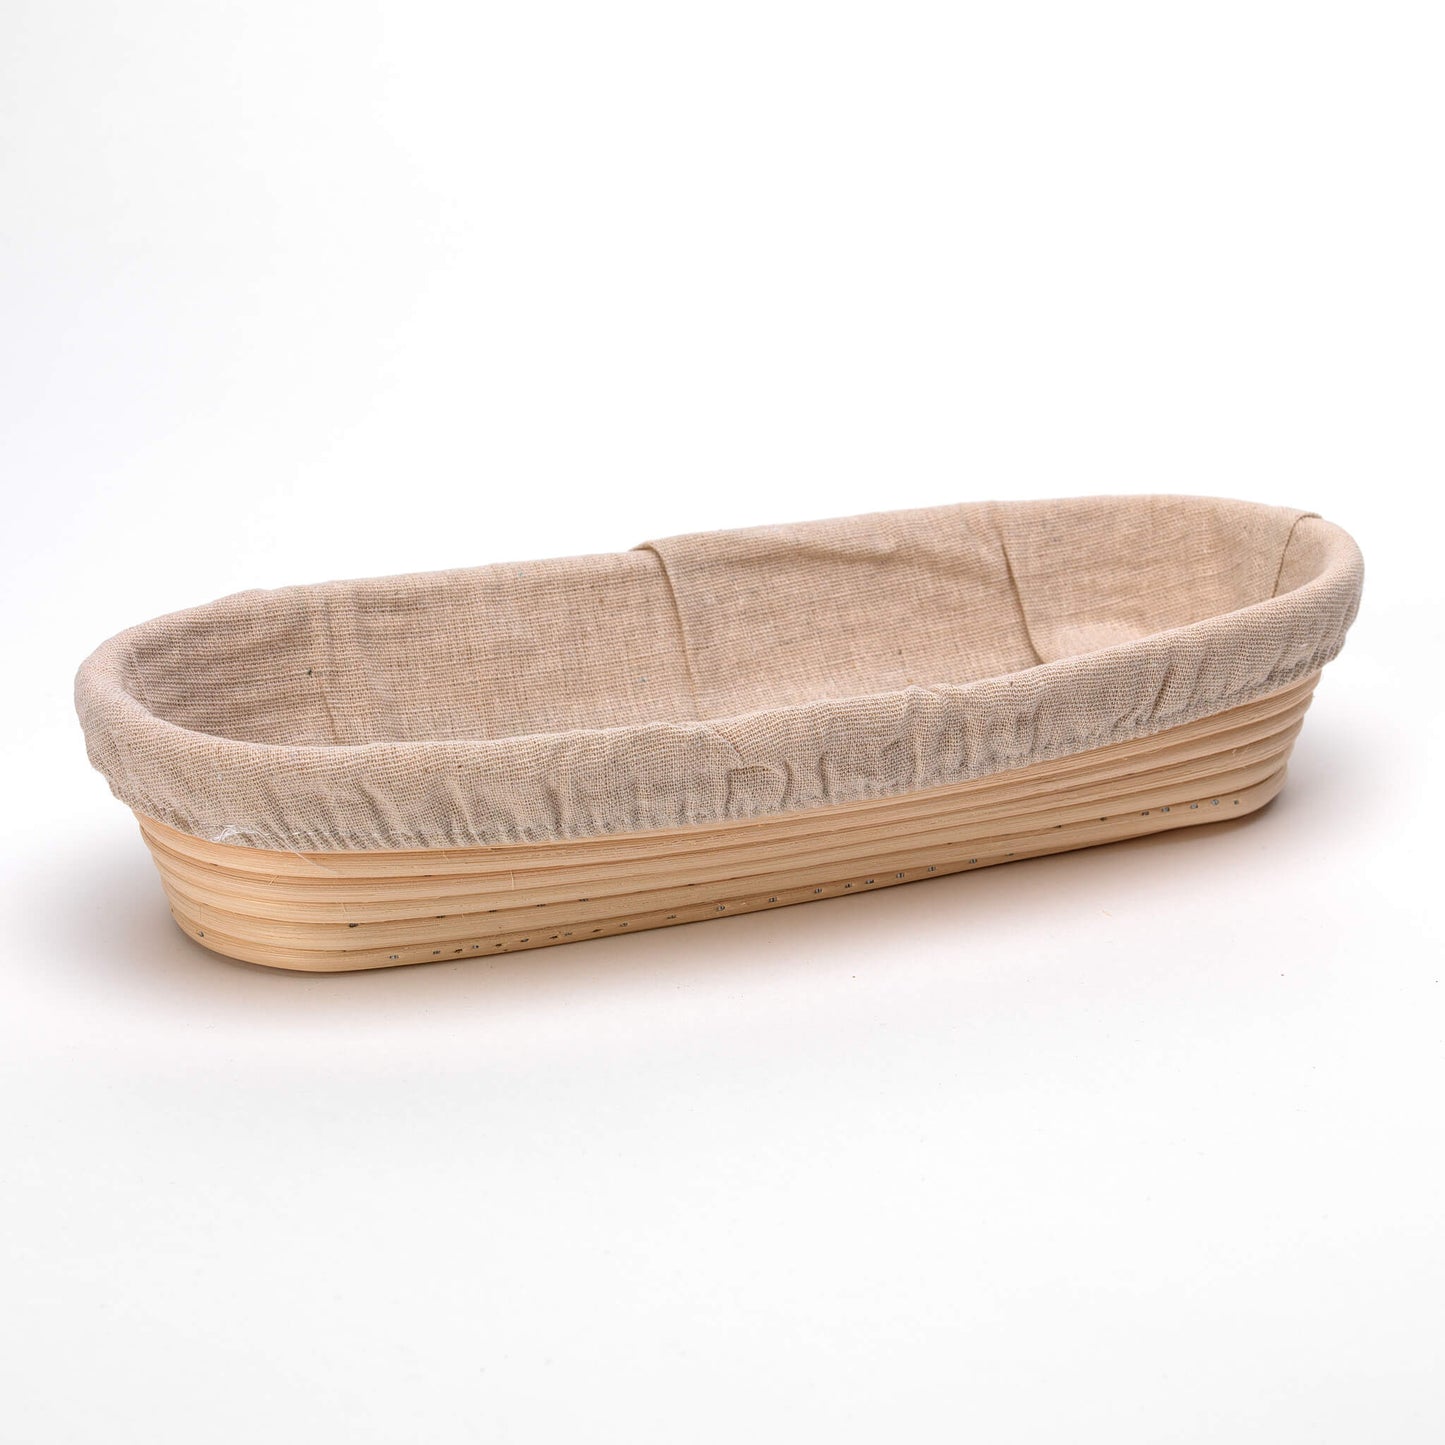 1Kg Oval or Rectangular 35cm Long Rattan Cane Banneton with Liner  Bread Dough Proving Proofing Basket Brotform